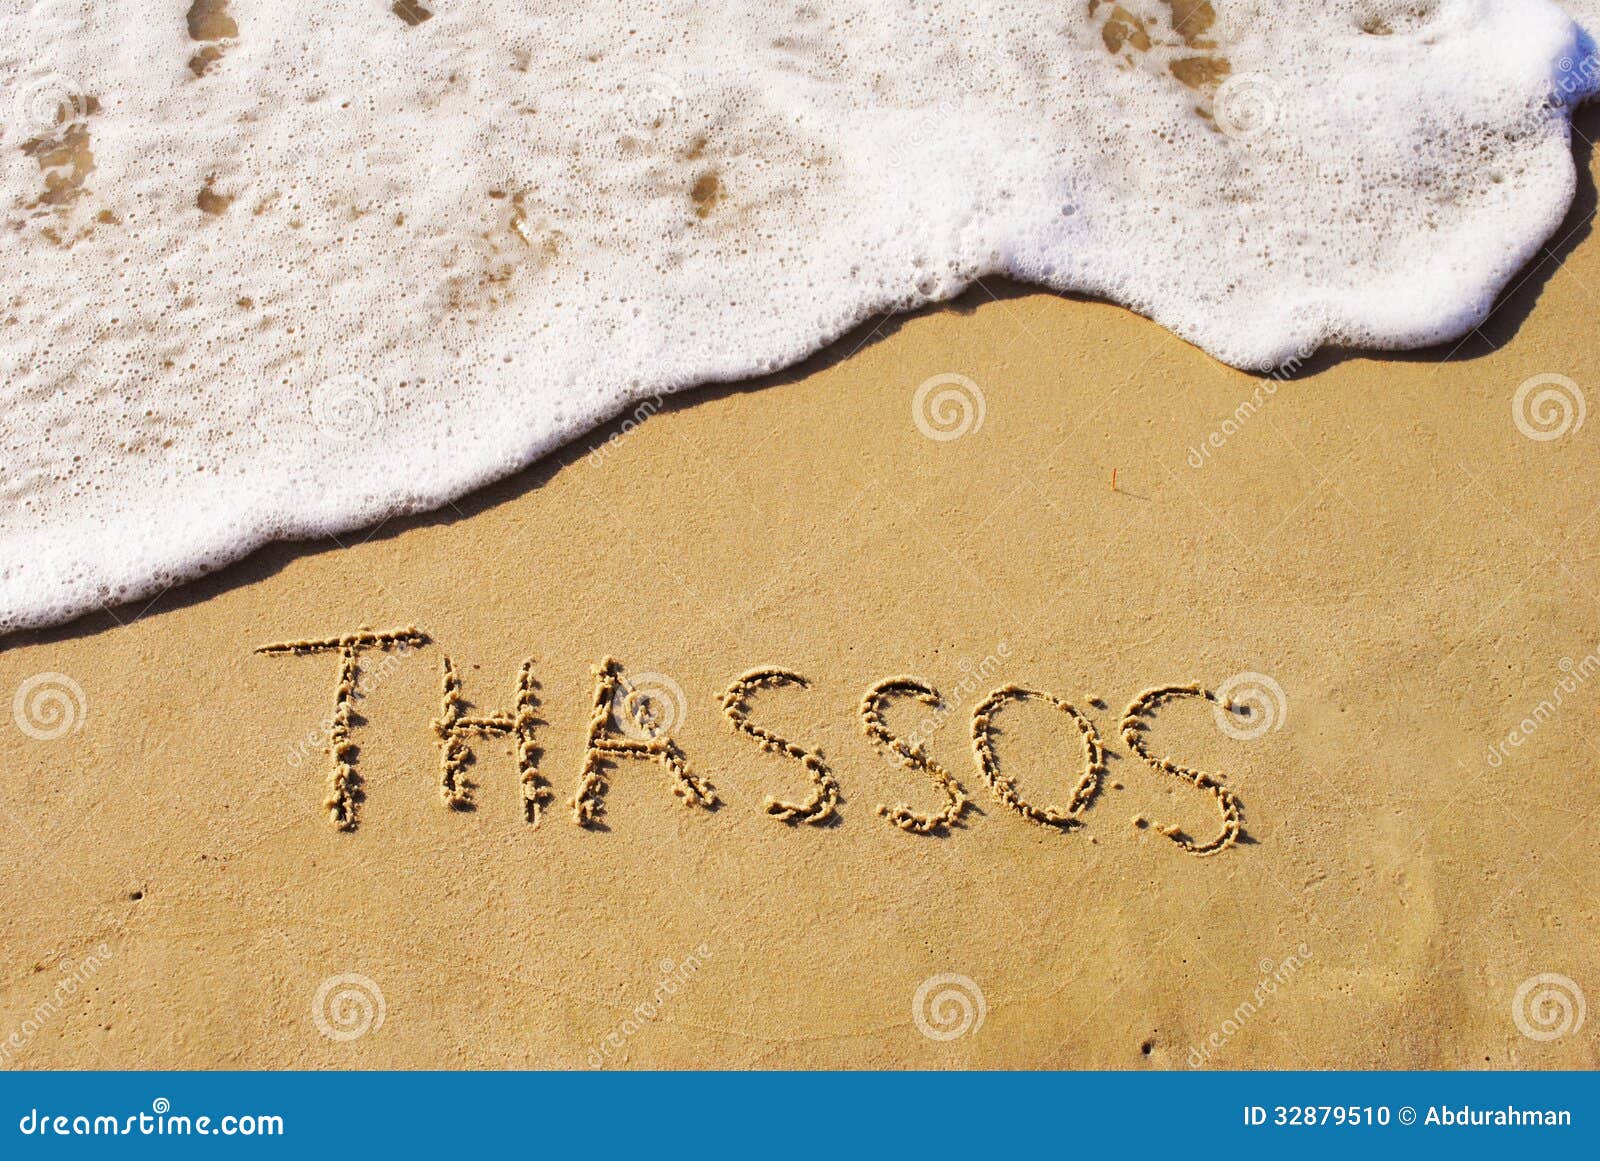 Thassos. Επιγραφή στην υγρή άμμο κοντά στη θάλασσα